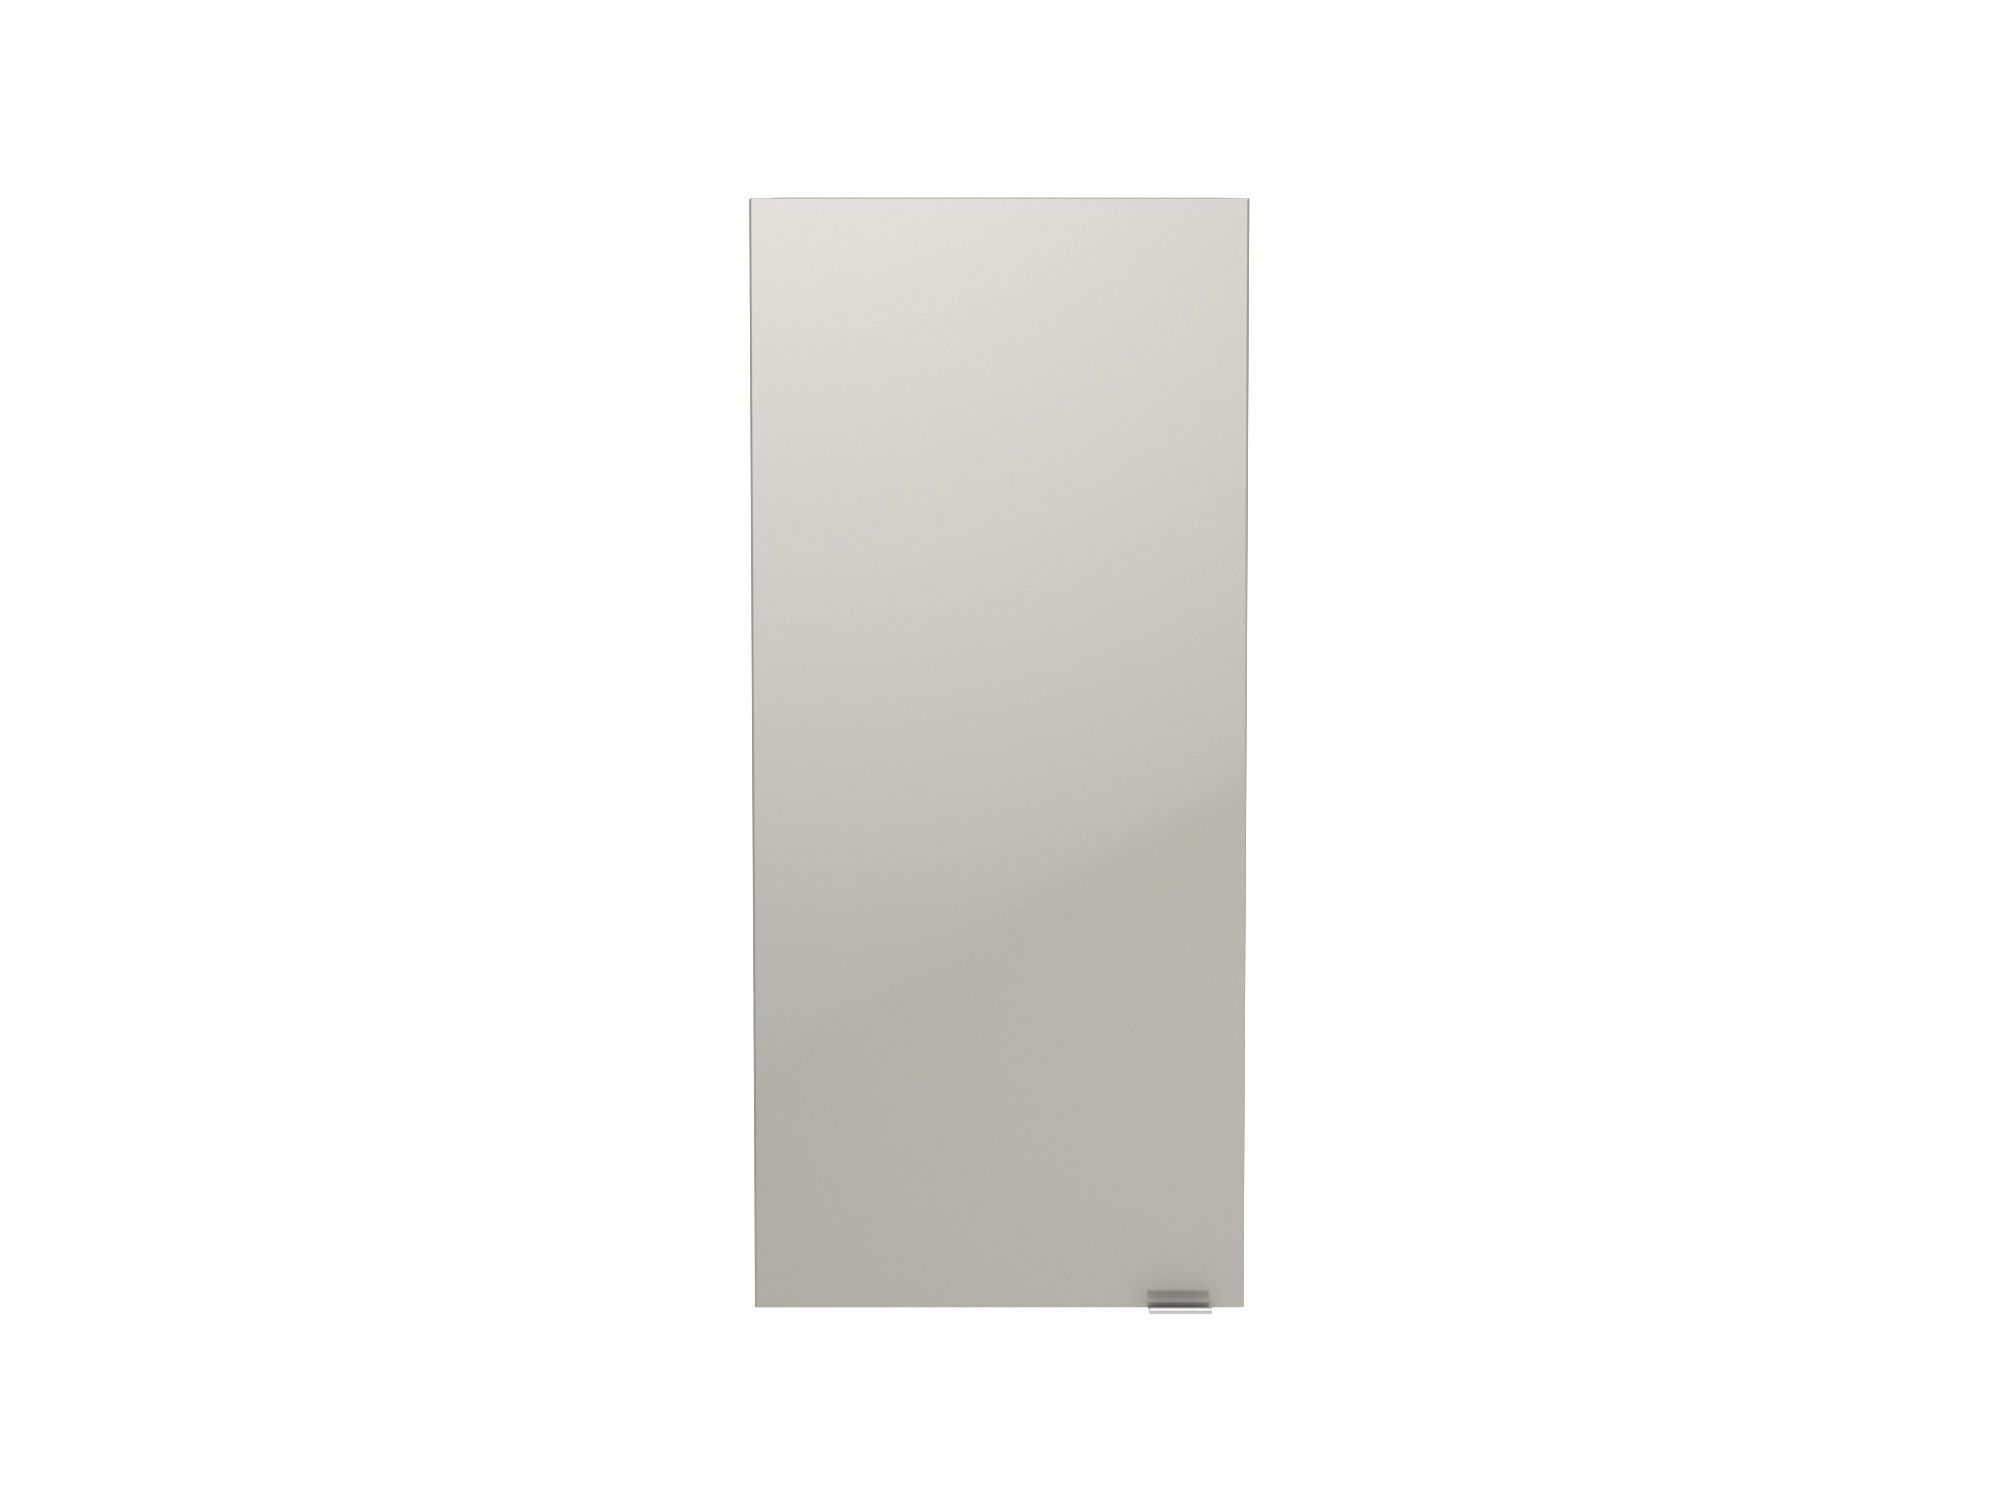 GoodHome Imandra Gloss Taupe Single Deep Wall Cabinet (W)400mm (H)900mm